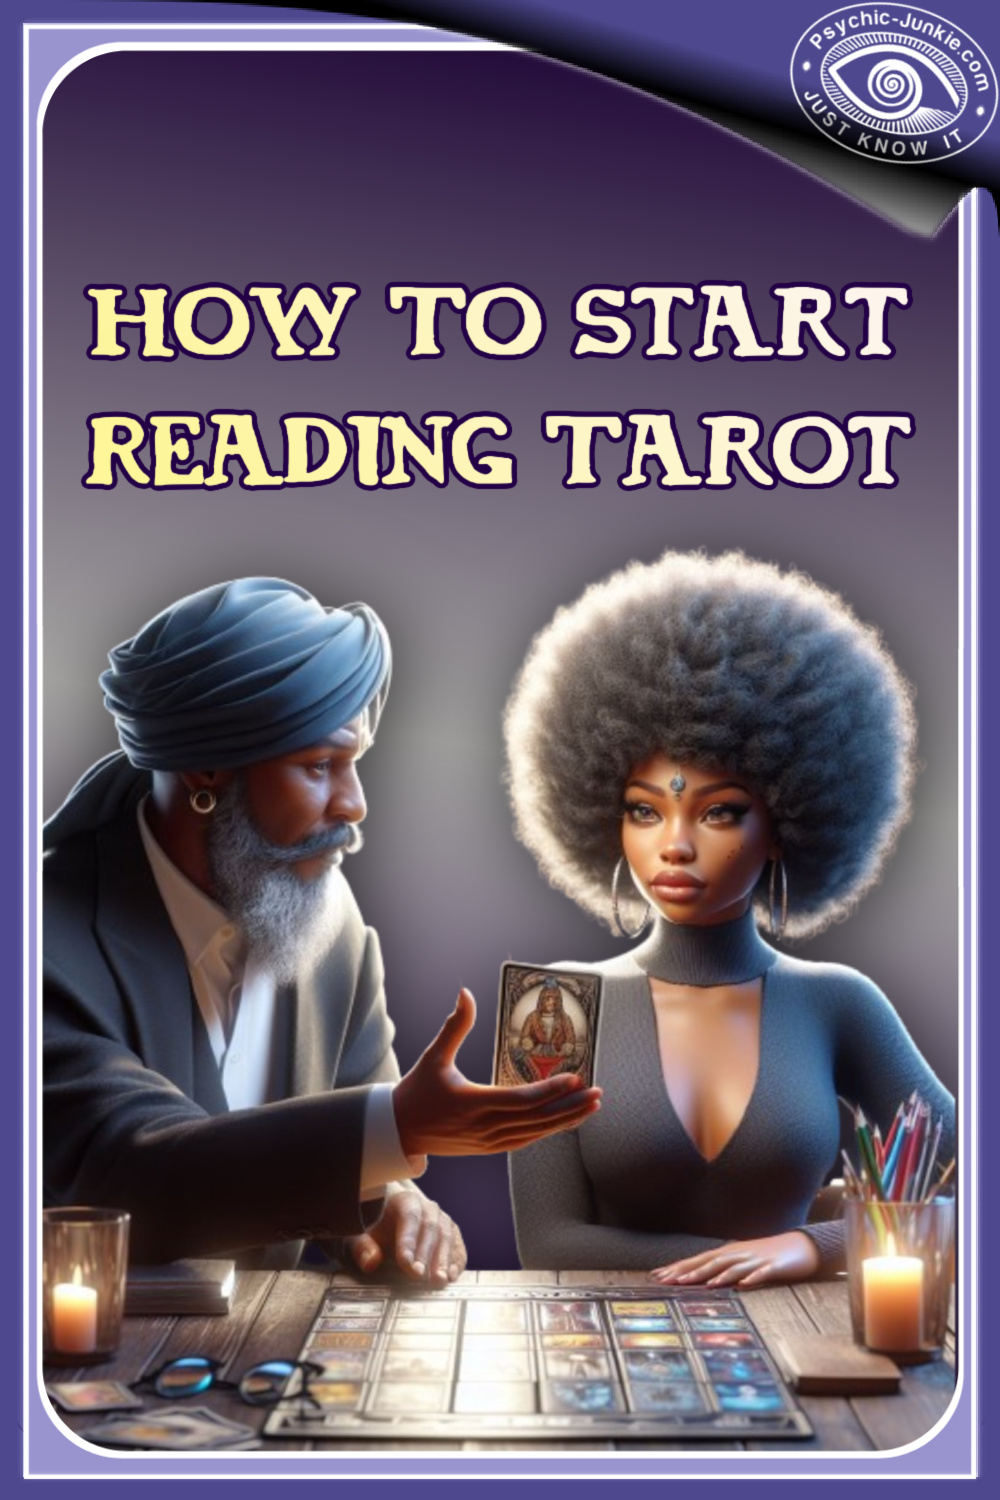 How To Start Reading Tarot Cards